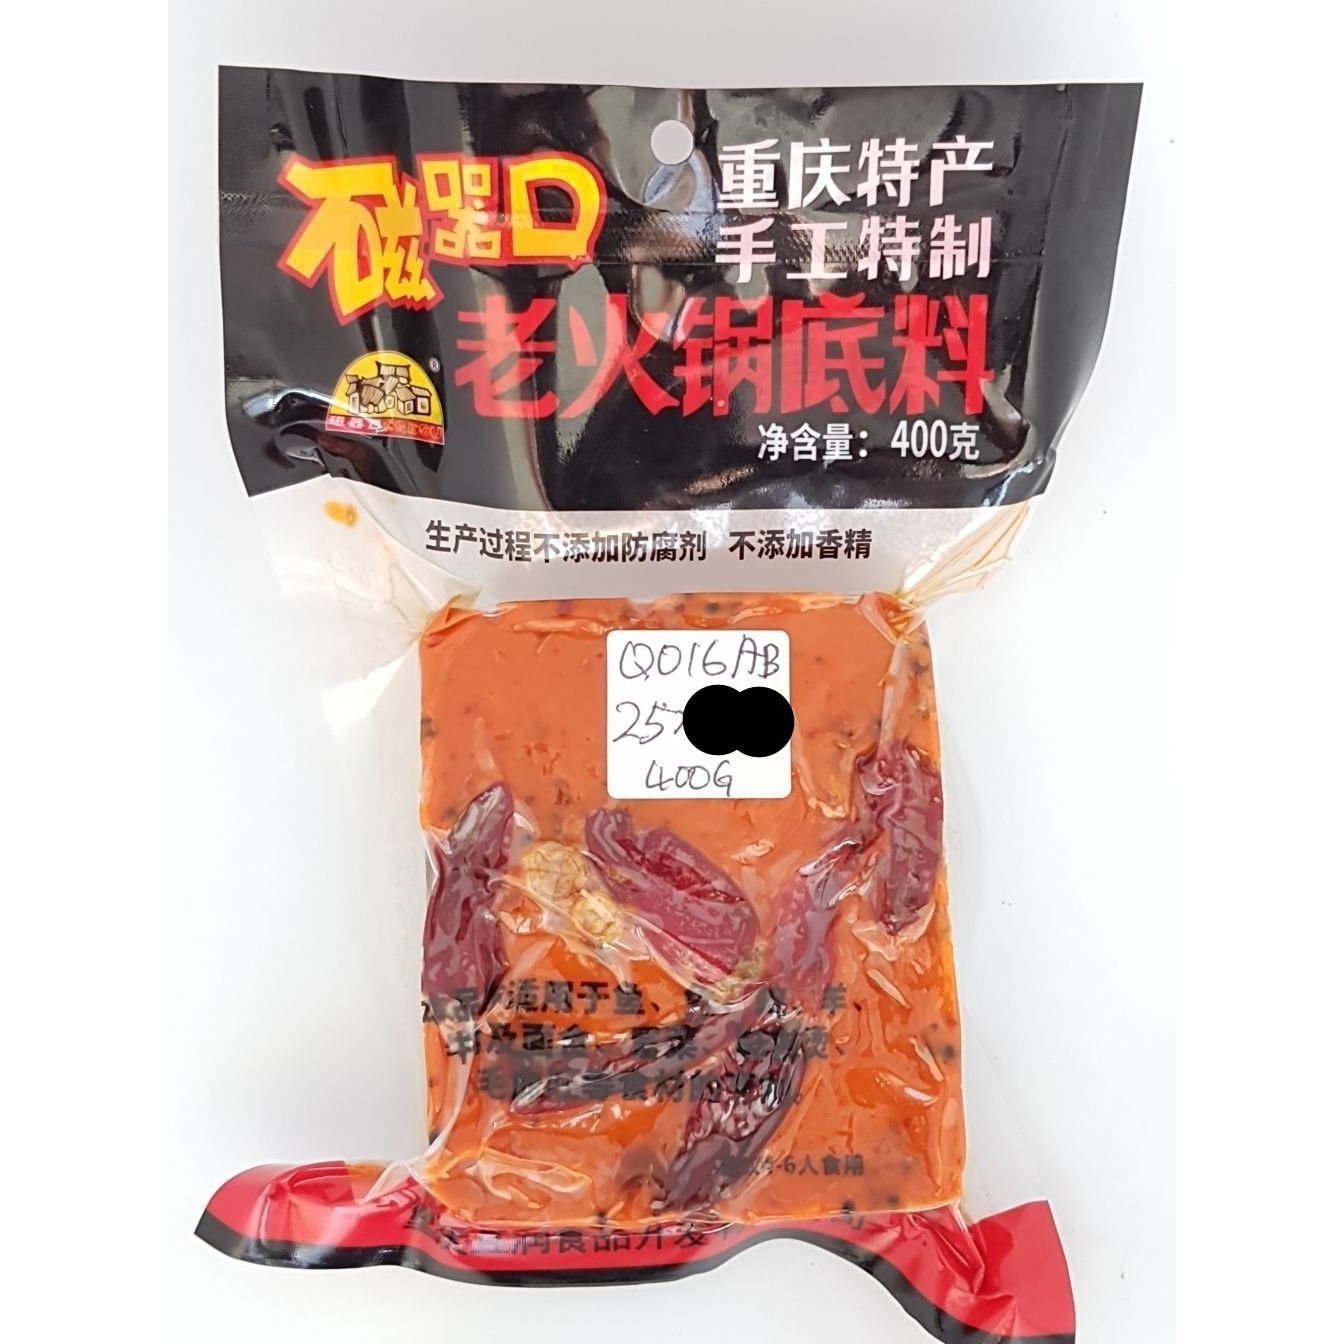 Q016AB TBD brand - Hot Pot Condiment 400g - 25 bag/CTN - New Eastland Pty Ltd - Asian food wholesalers